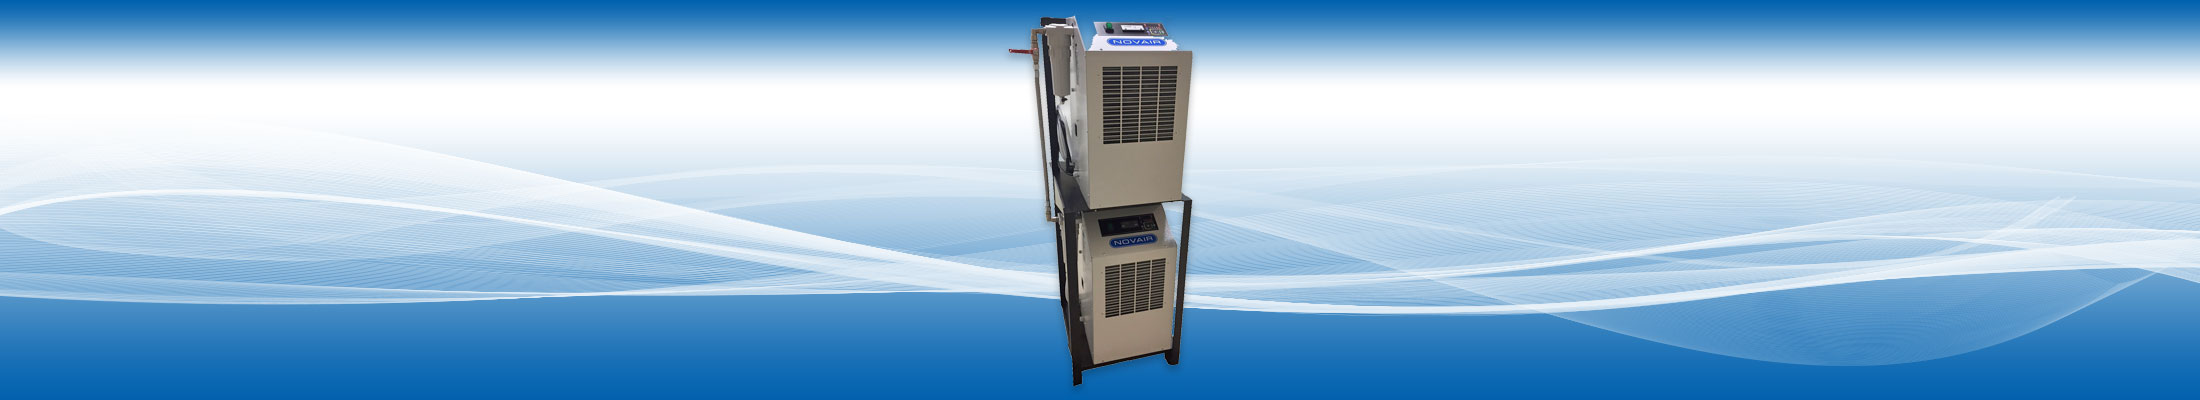 Refrigeration air treatment system